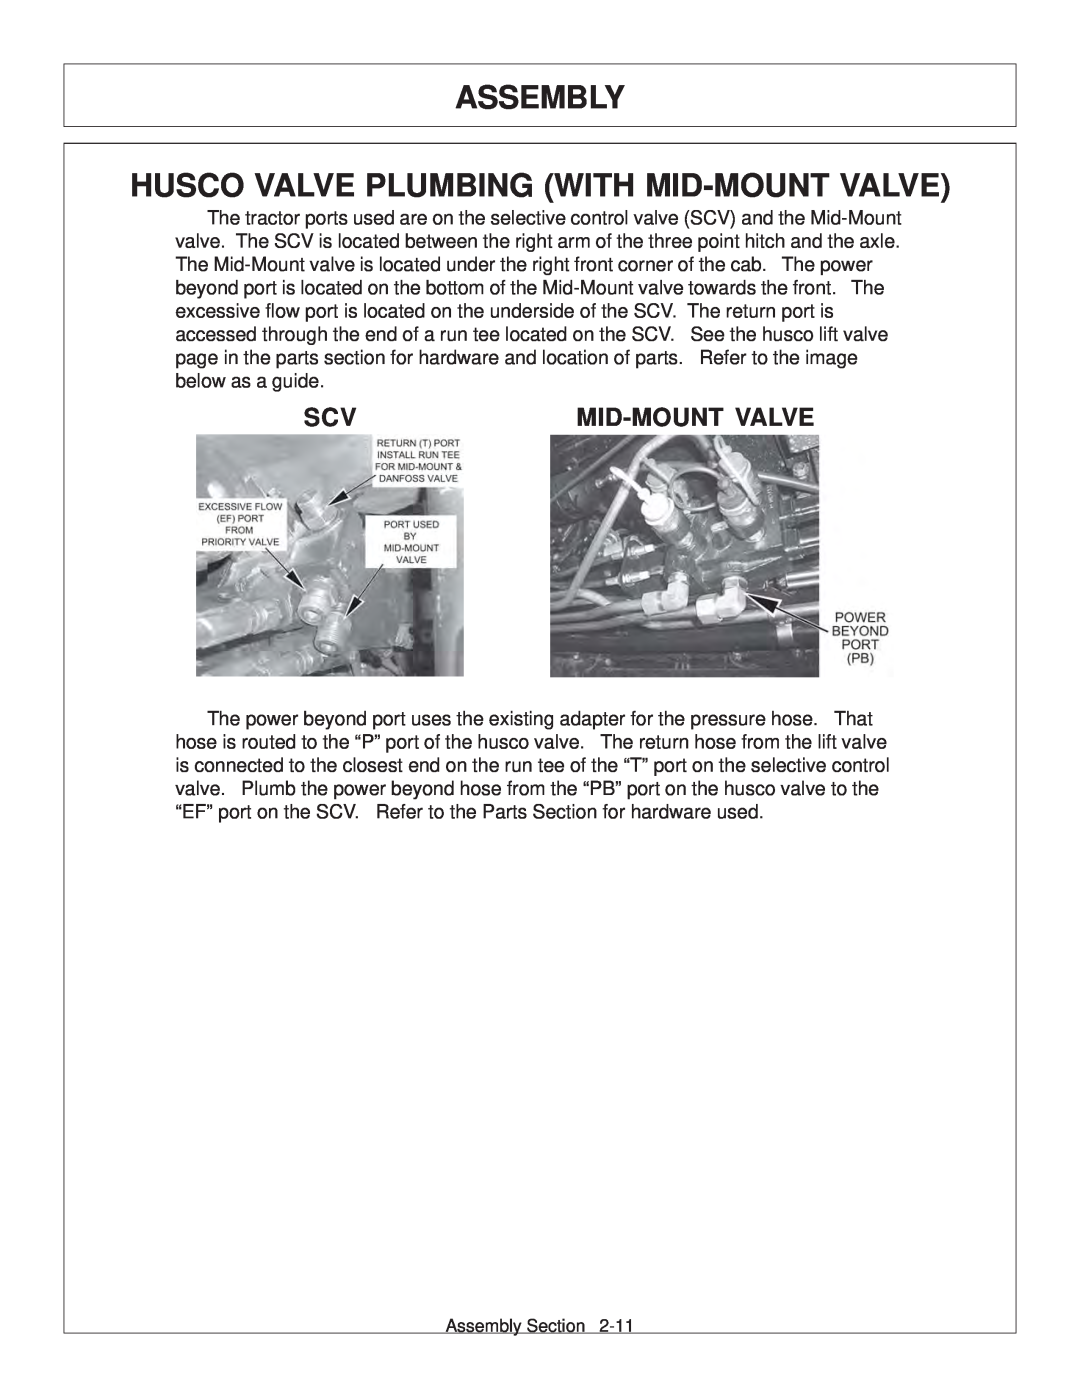 Tiger Products Co., Ltd JD 5101E, JD 5083E, JD 5093E manual Assembly Husco Valve Plumbing With Mid-Mount Valve 